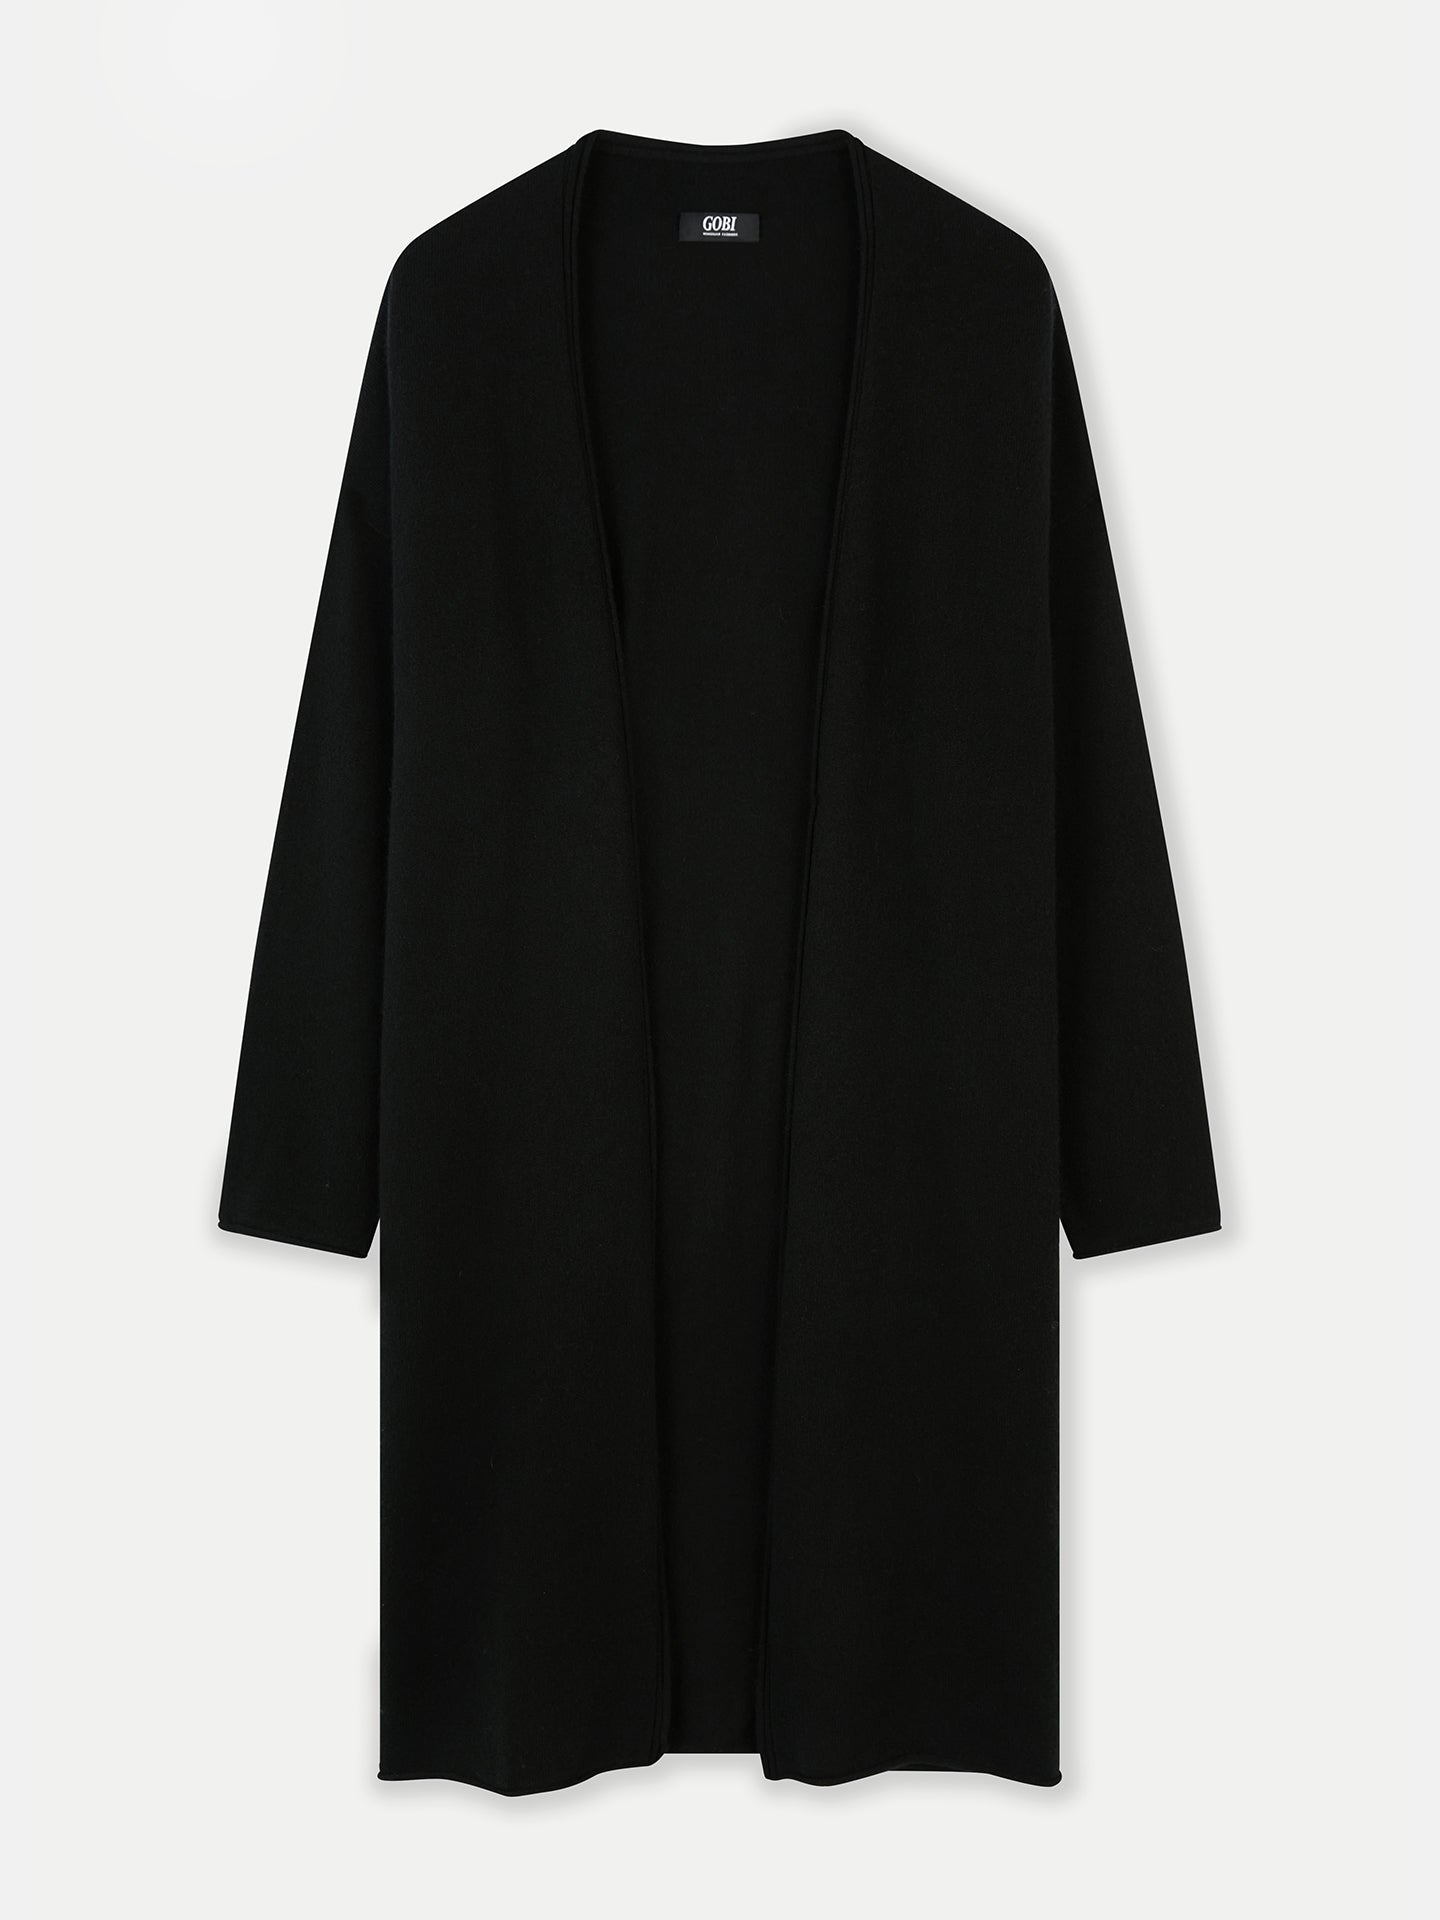 Women's Cashmere 3D Longline Cardigan Black - Gobi Cashmere